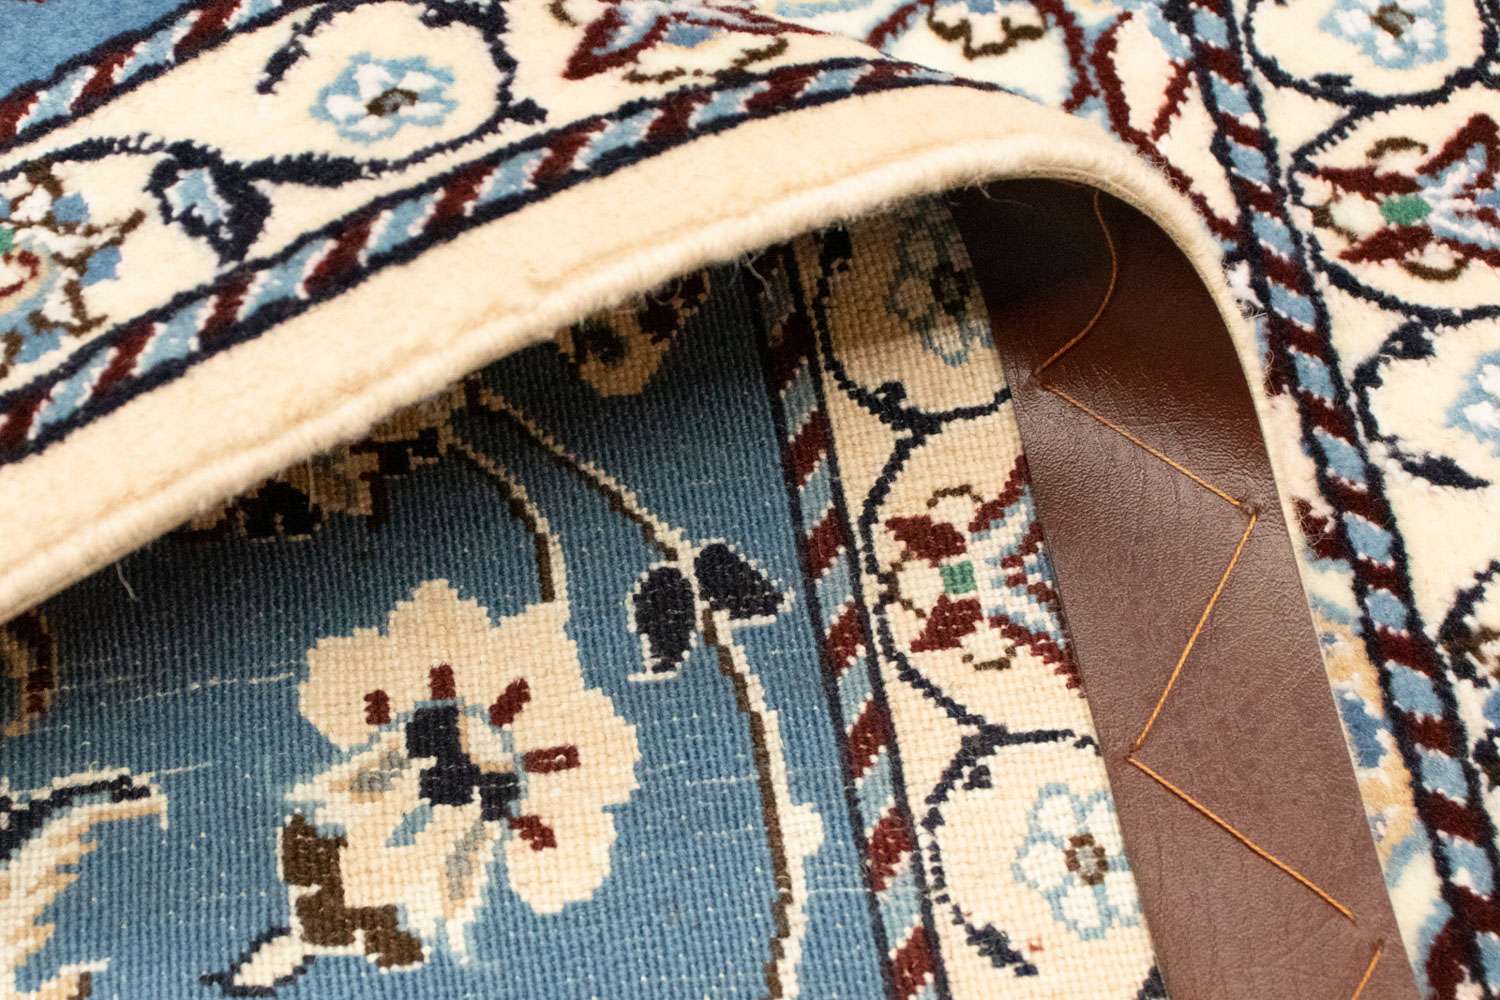 Perský koberec - Nain - Royal - 125 x 88 cm - modrá